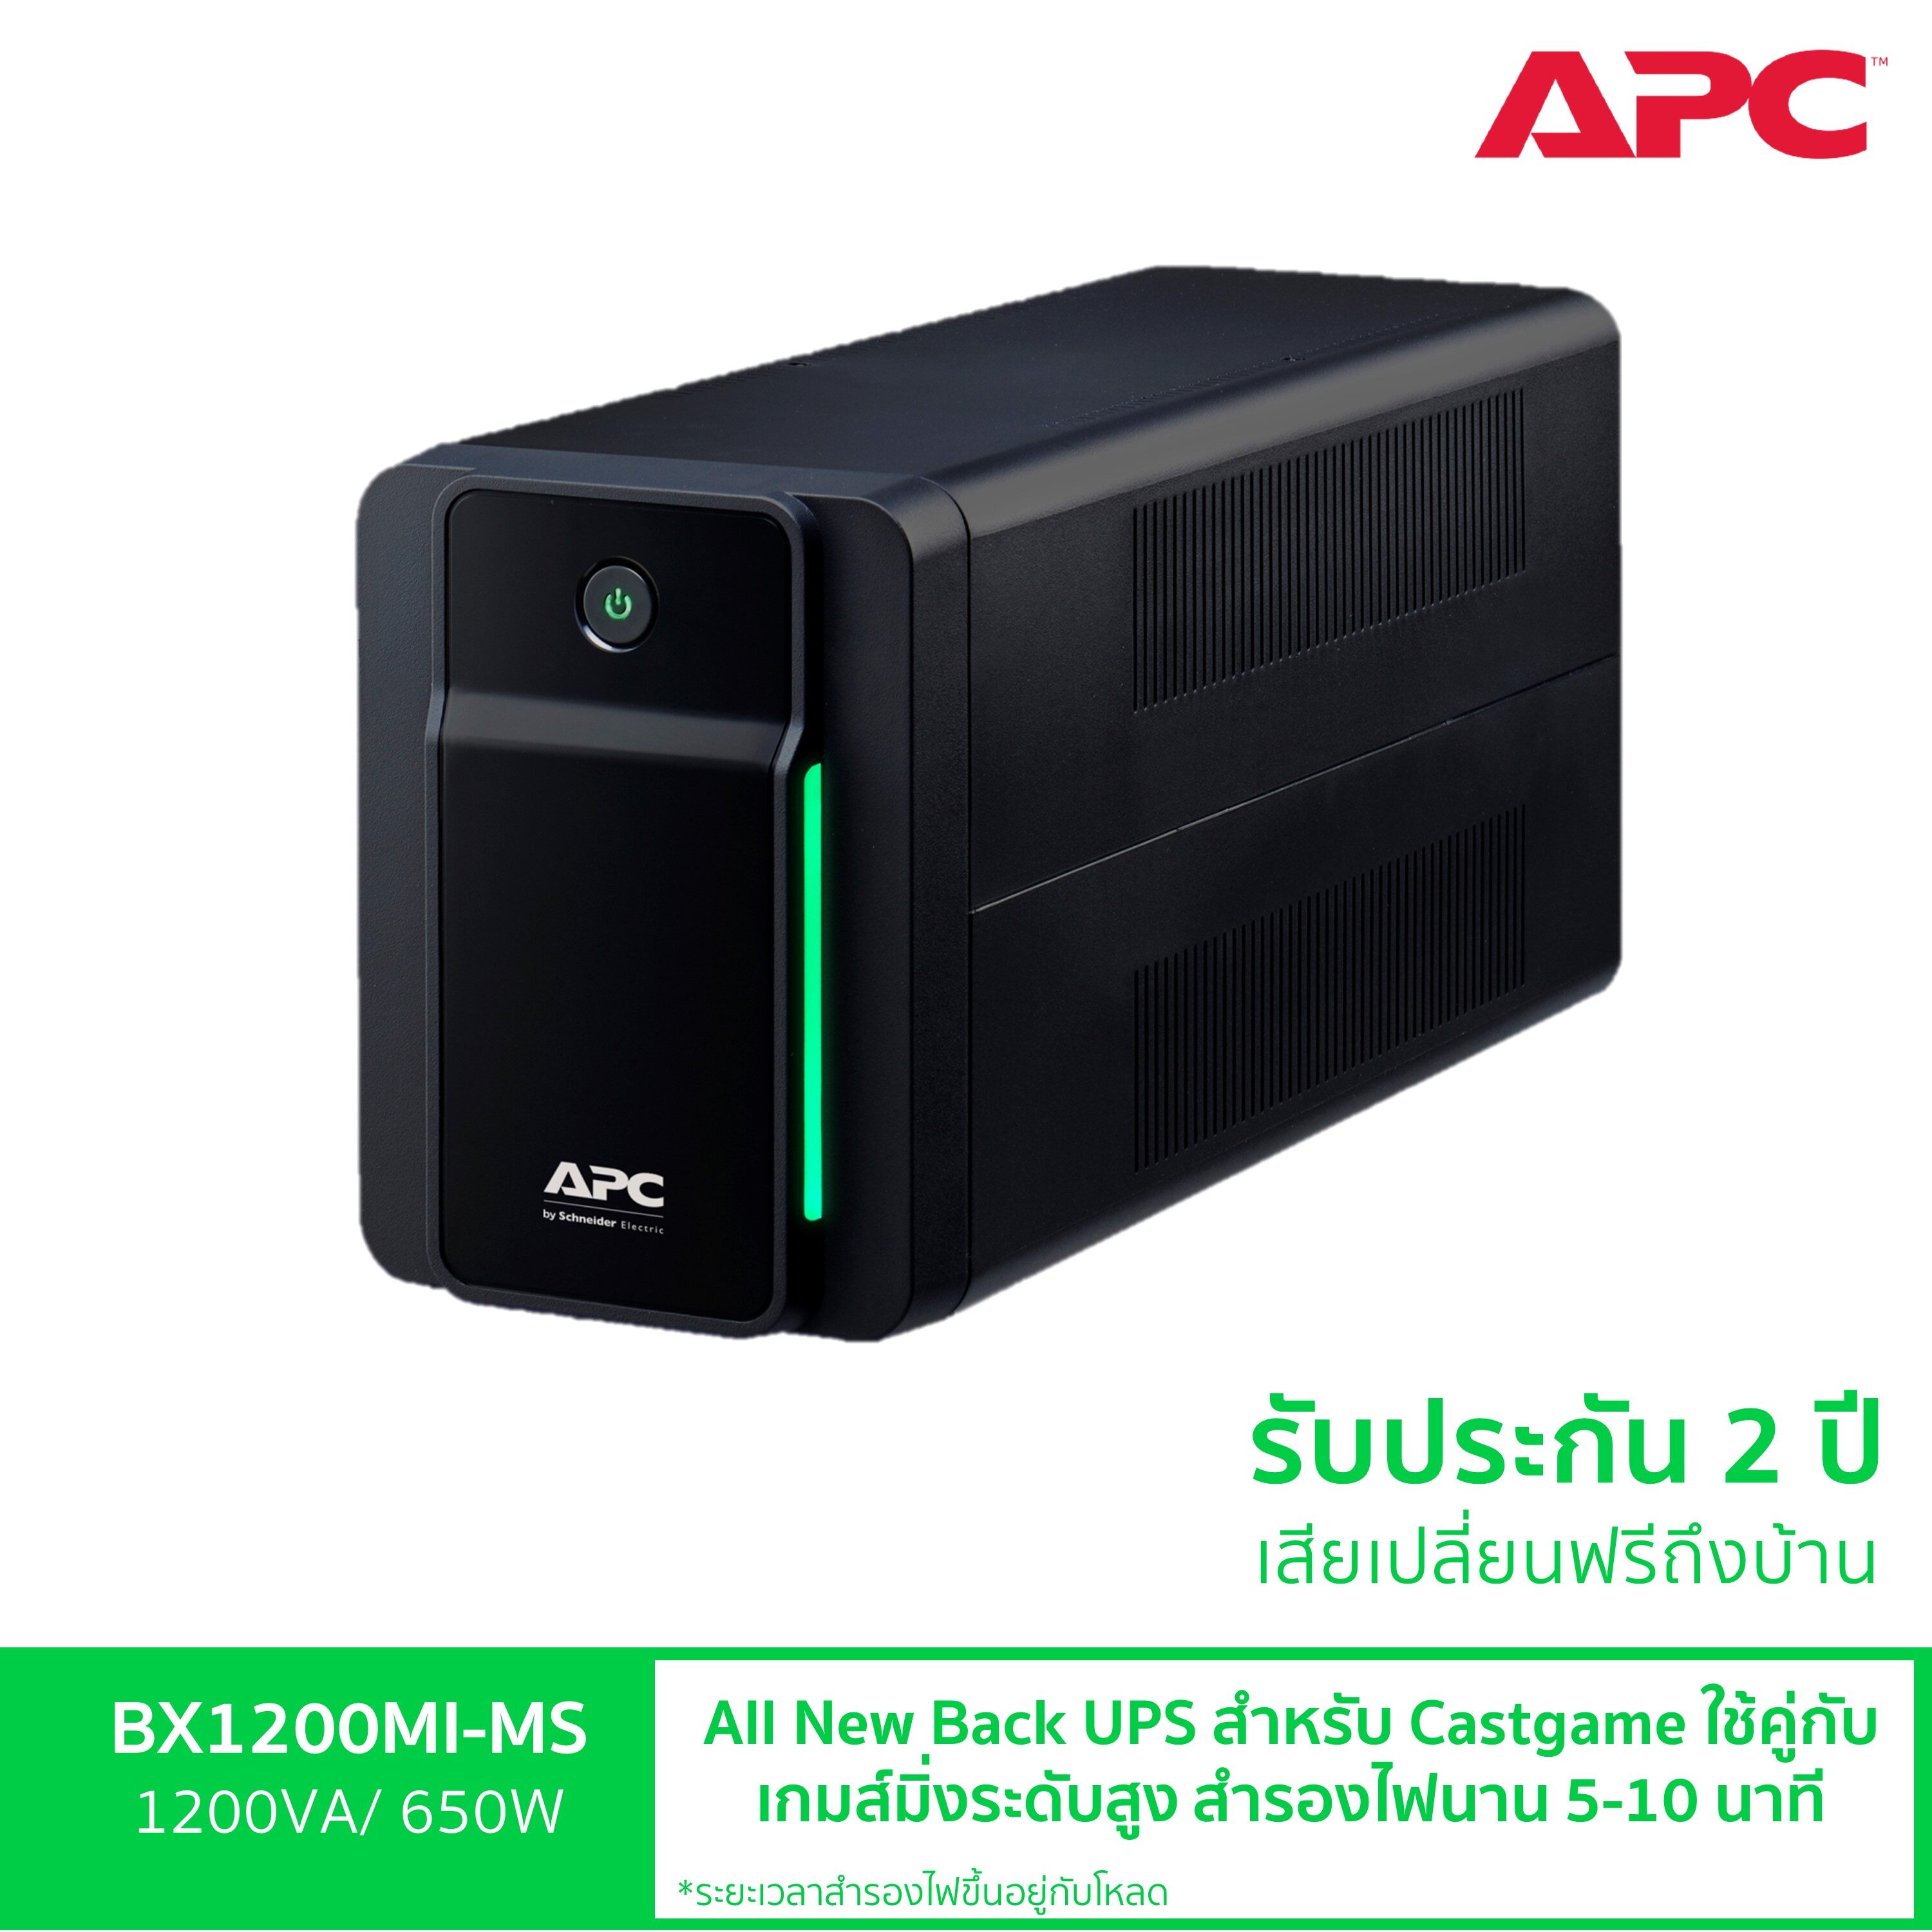 APC Back UPS BX1200MI-MS (1200VA/650WATT)มี AVR 4 Universal และ 1 IEC Outlets แถบไฟ LED ส่องสว่างแจ้งเตือนสถานะเครื่อง มี Software สำรองไฟนาน 5-10 นาที*ขึ้นอยู่กับโหลด